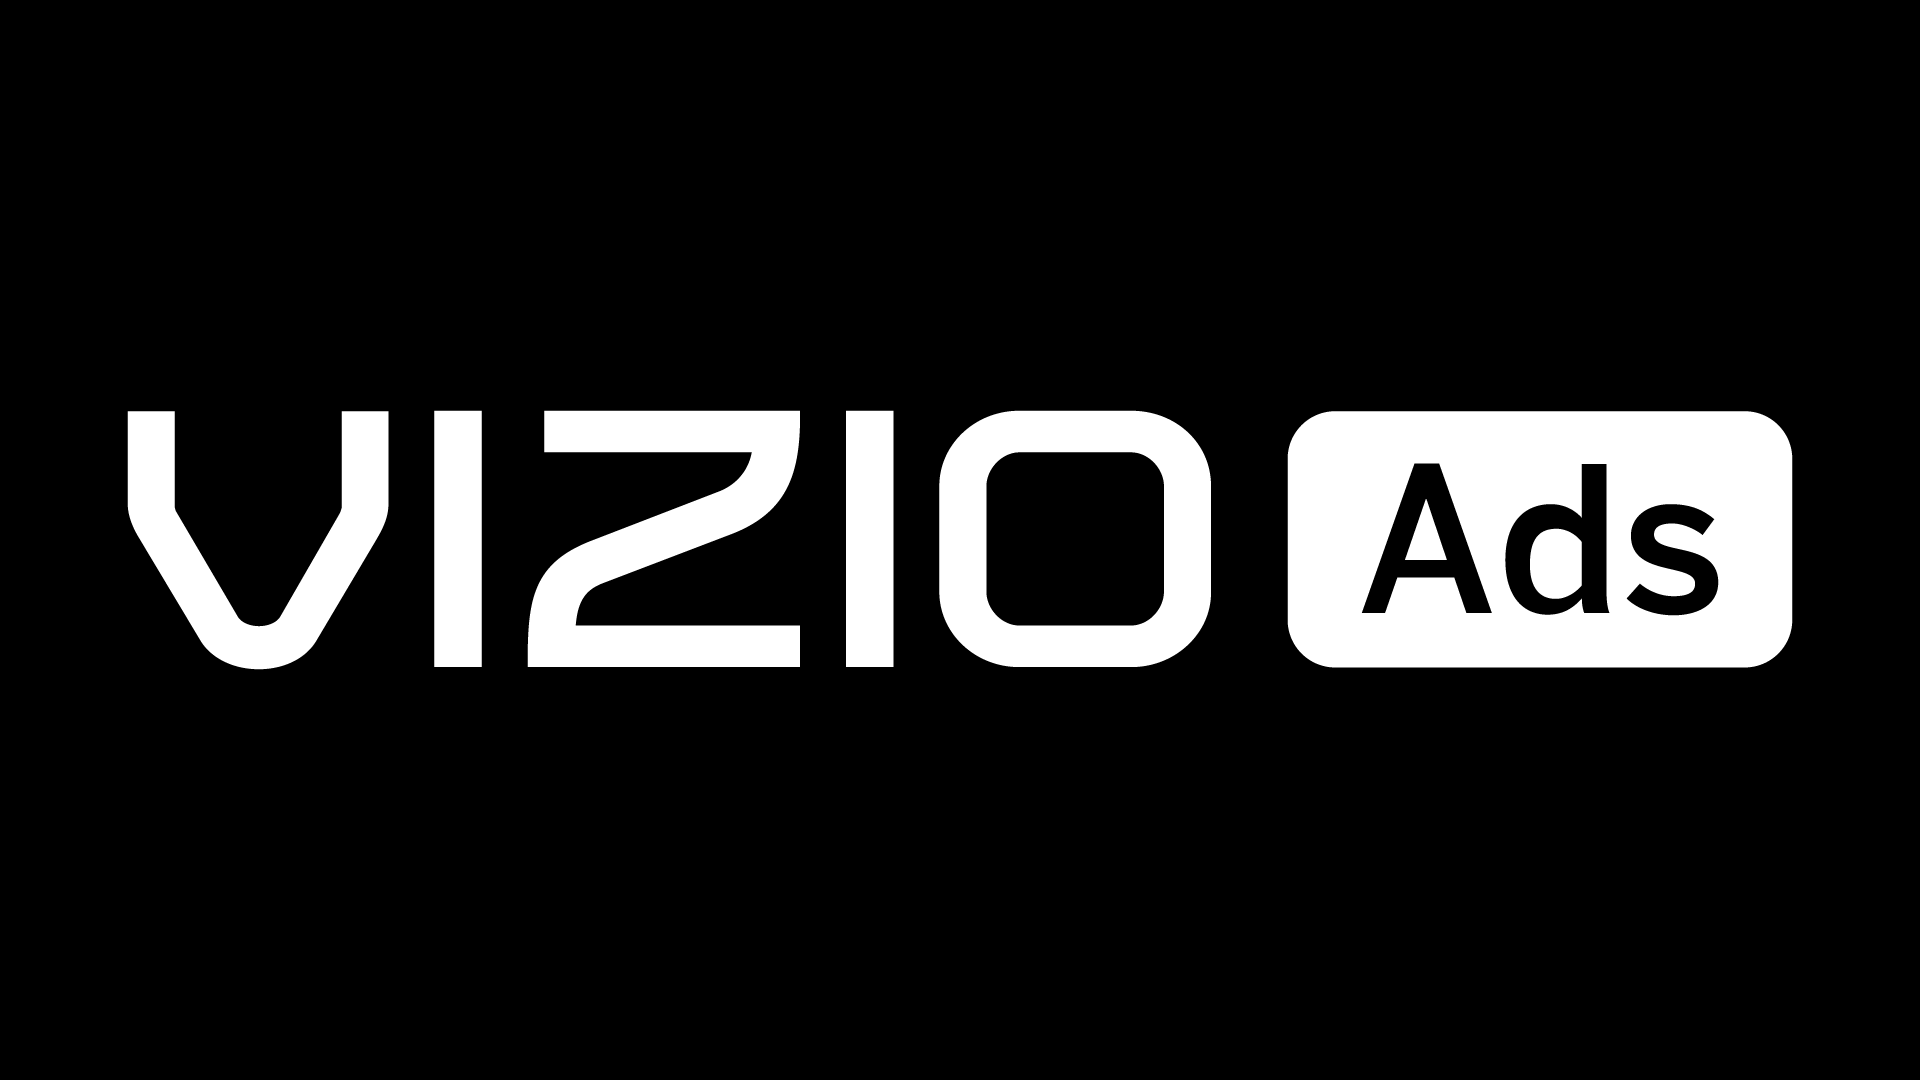 VIZIO-Ads-Logo_Black-Background